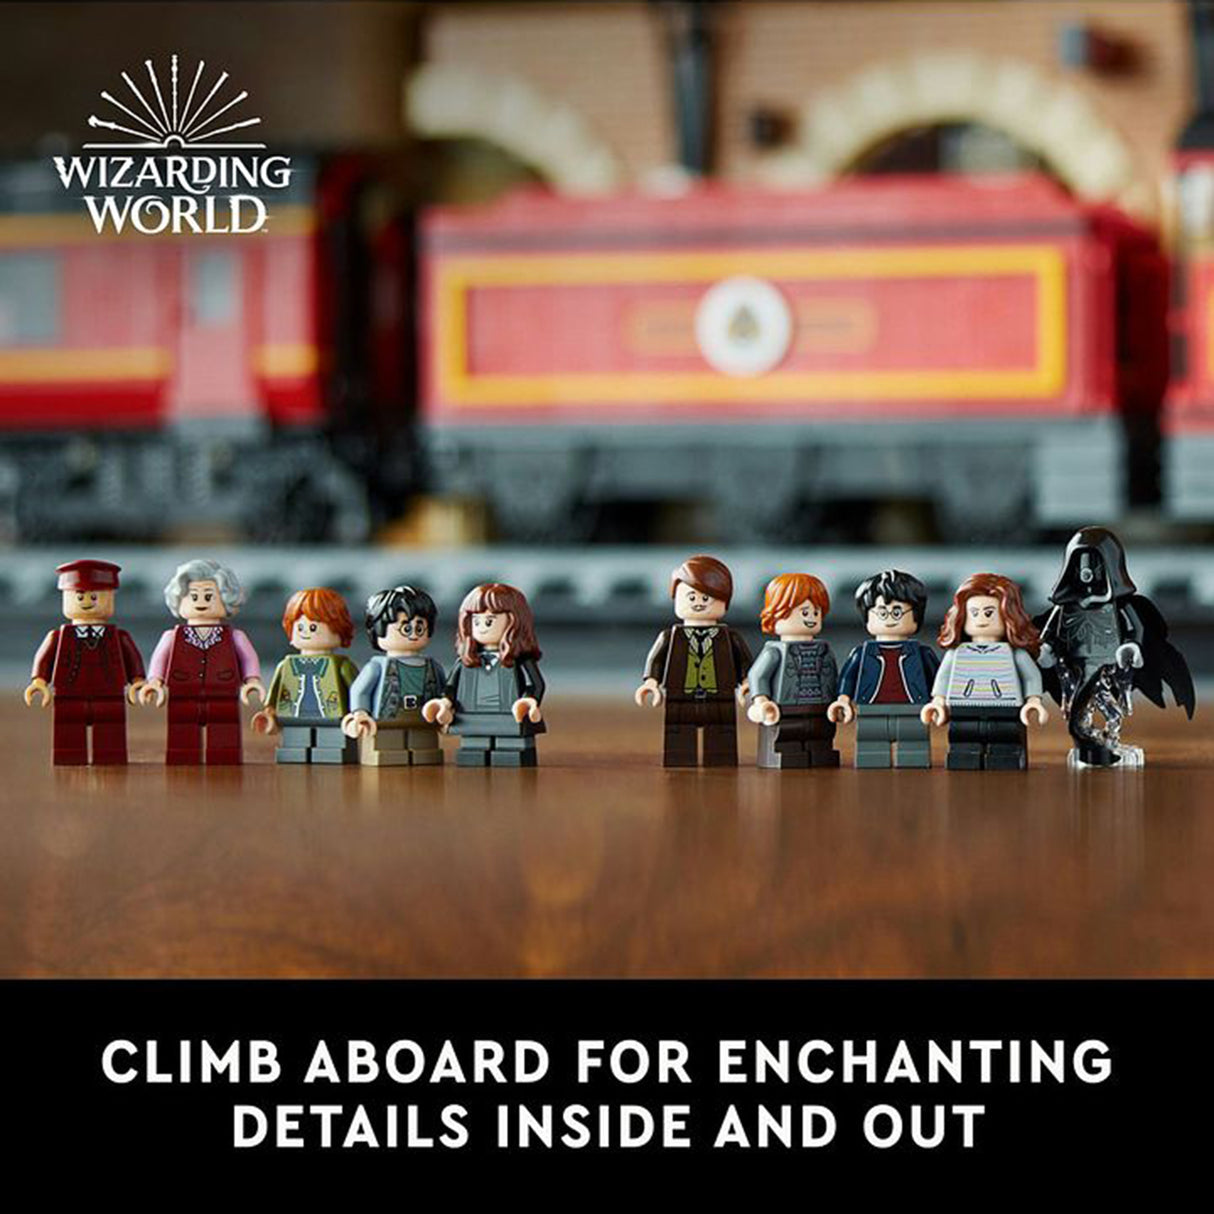 LEGO Harry Potter Hogwarts Express Collectors Edition 76405 (5129 pieces)